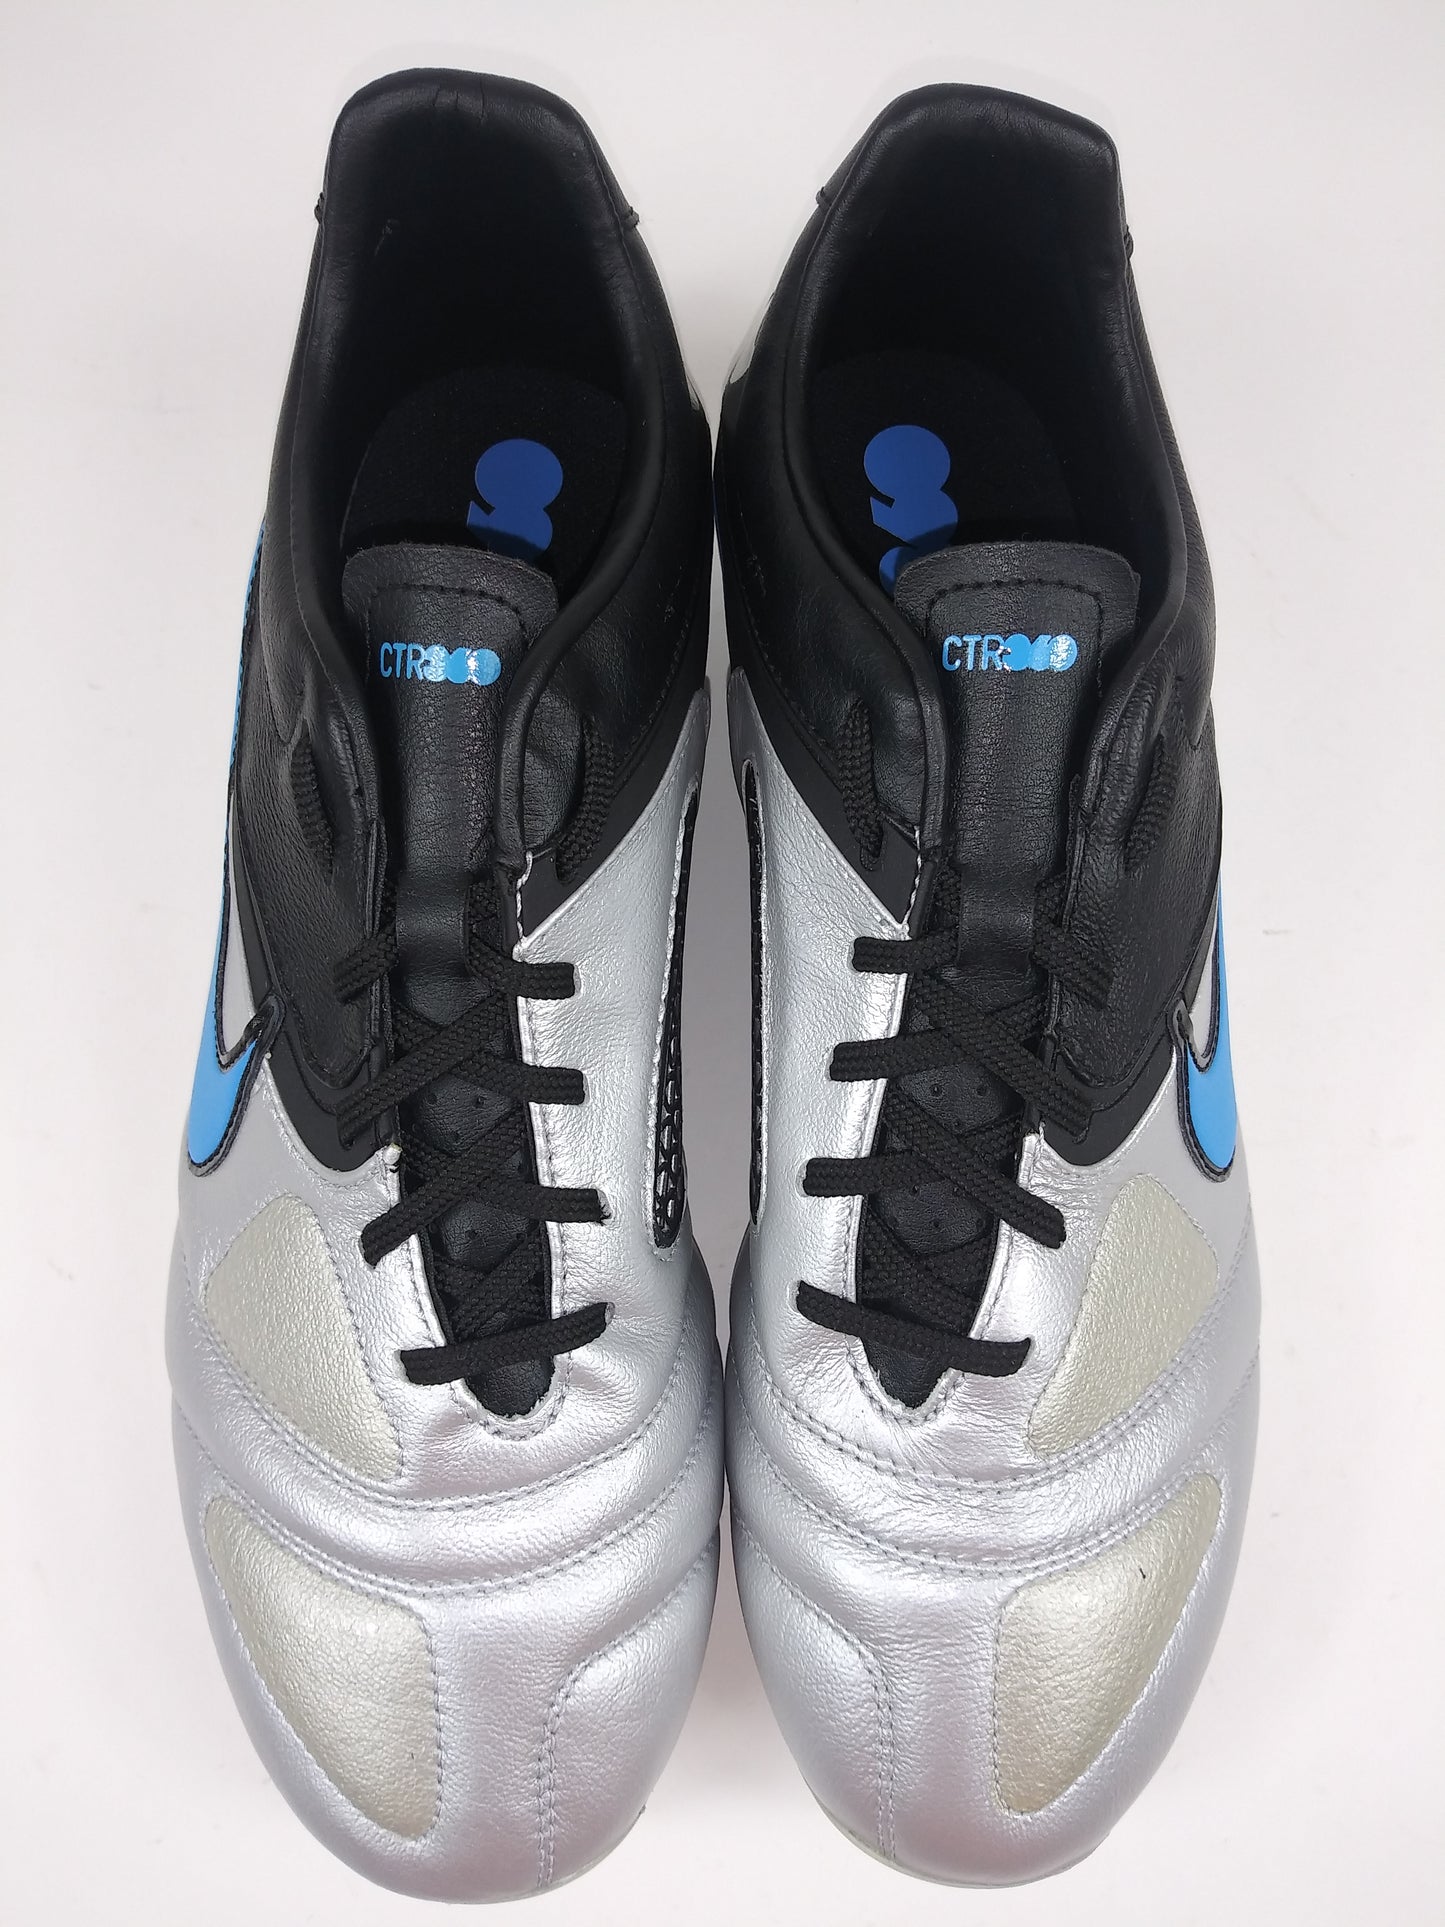 Nike CTR360 Libretto ll FG Silver Blue